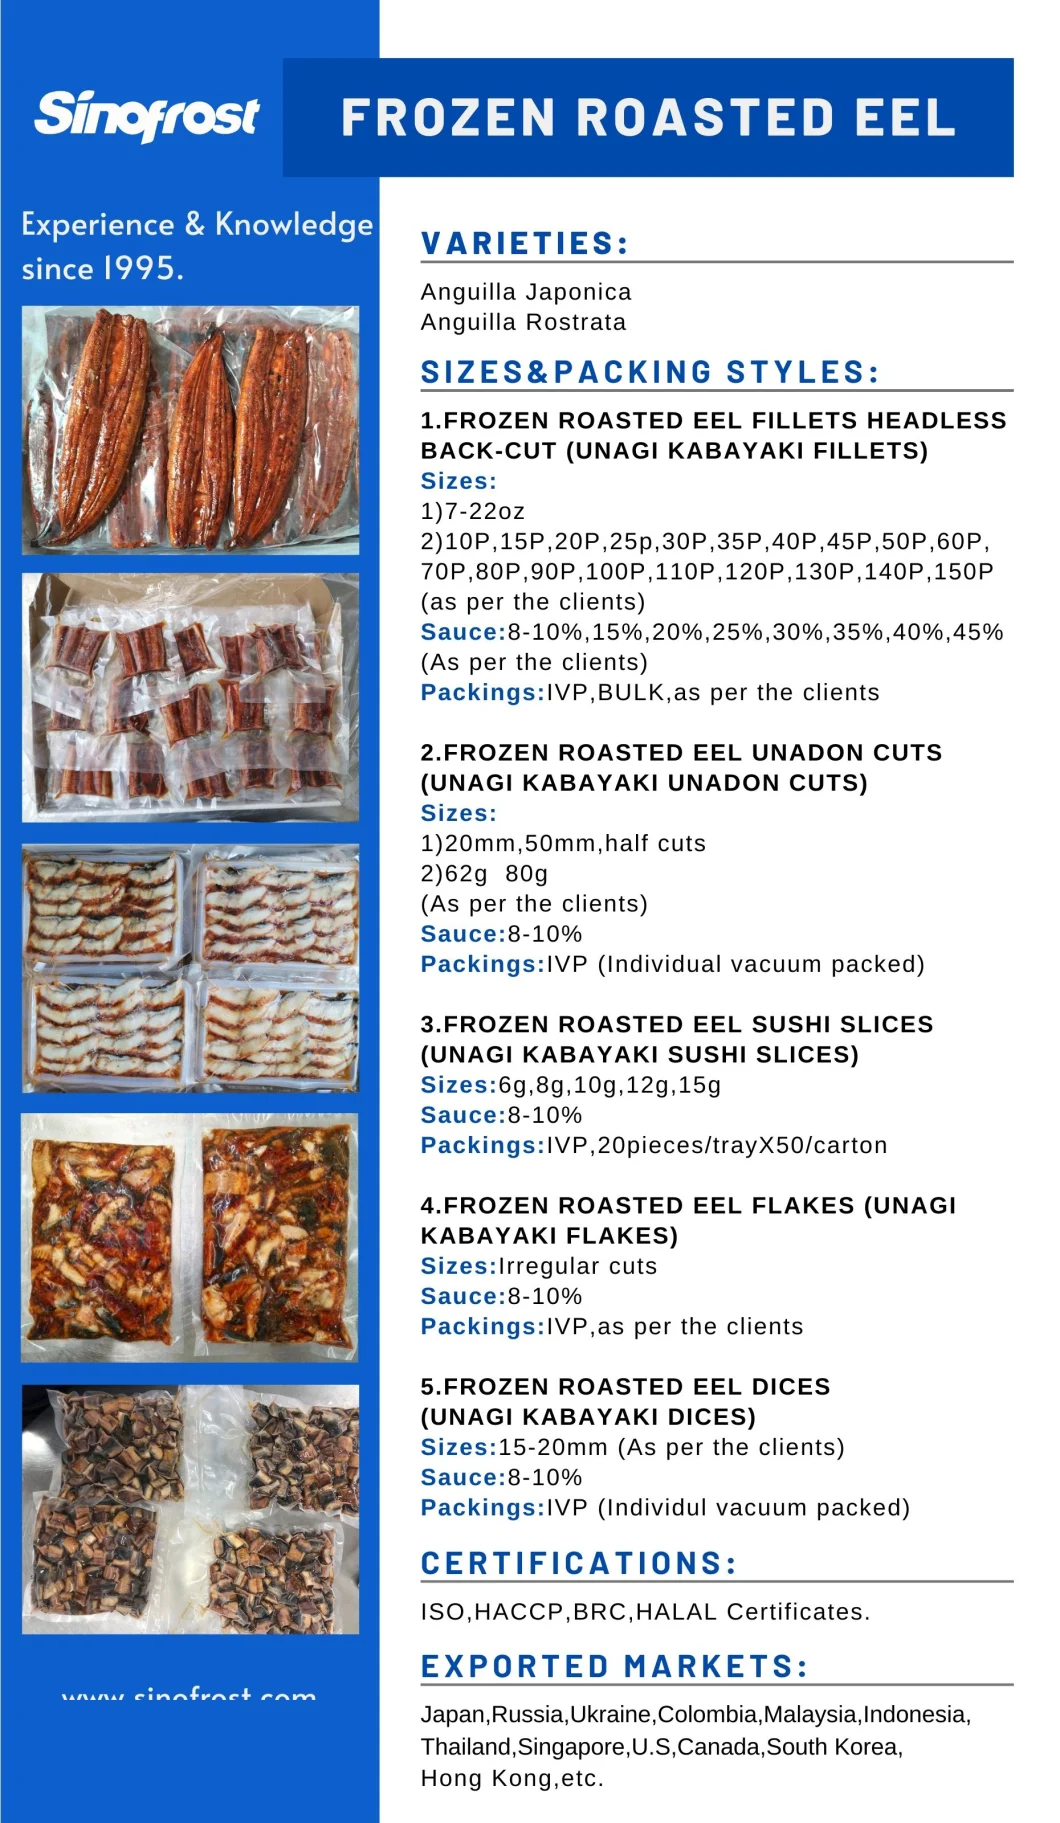 Unagi Kabayaki Flakes, Frozen Roasted Eel Flakes, Frozen Prepared Eel Irregular Cuts, Frozen Broiled Eel Flakes, Frozen Grilled Eel Flakes, Frozen Seafood